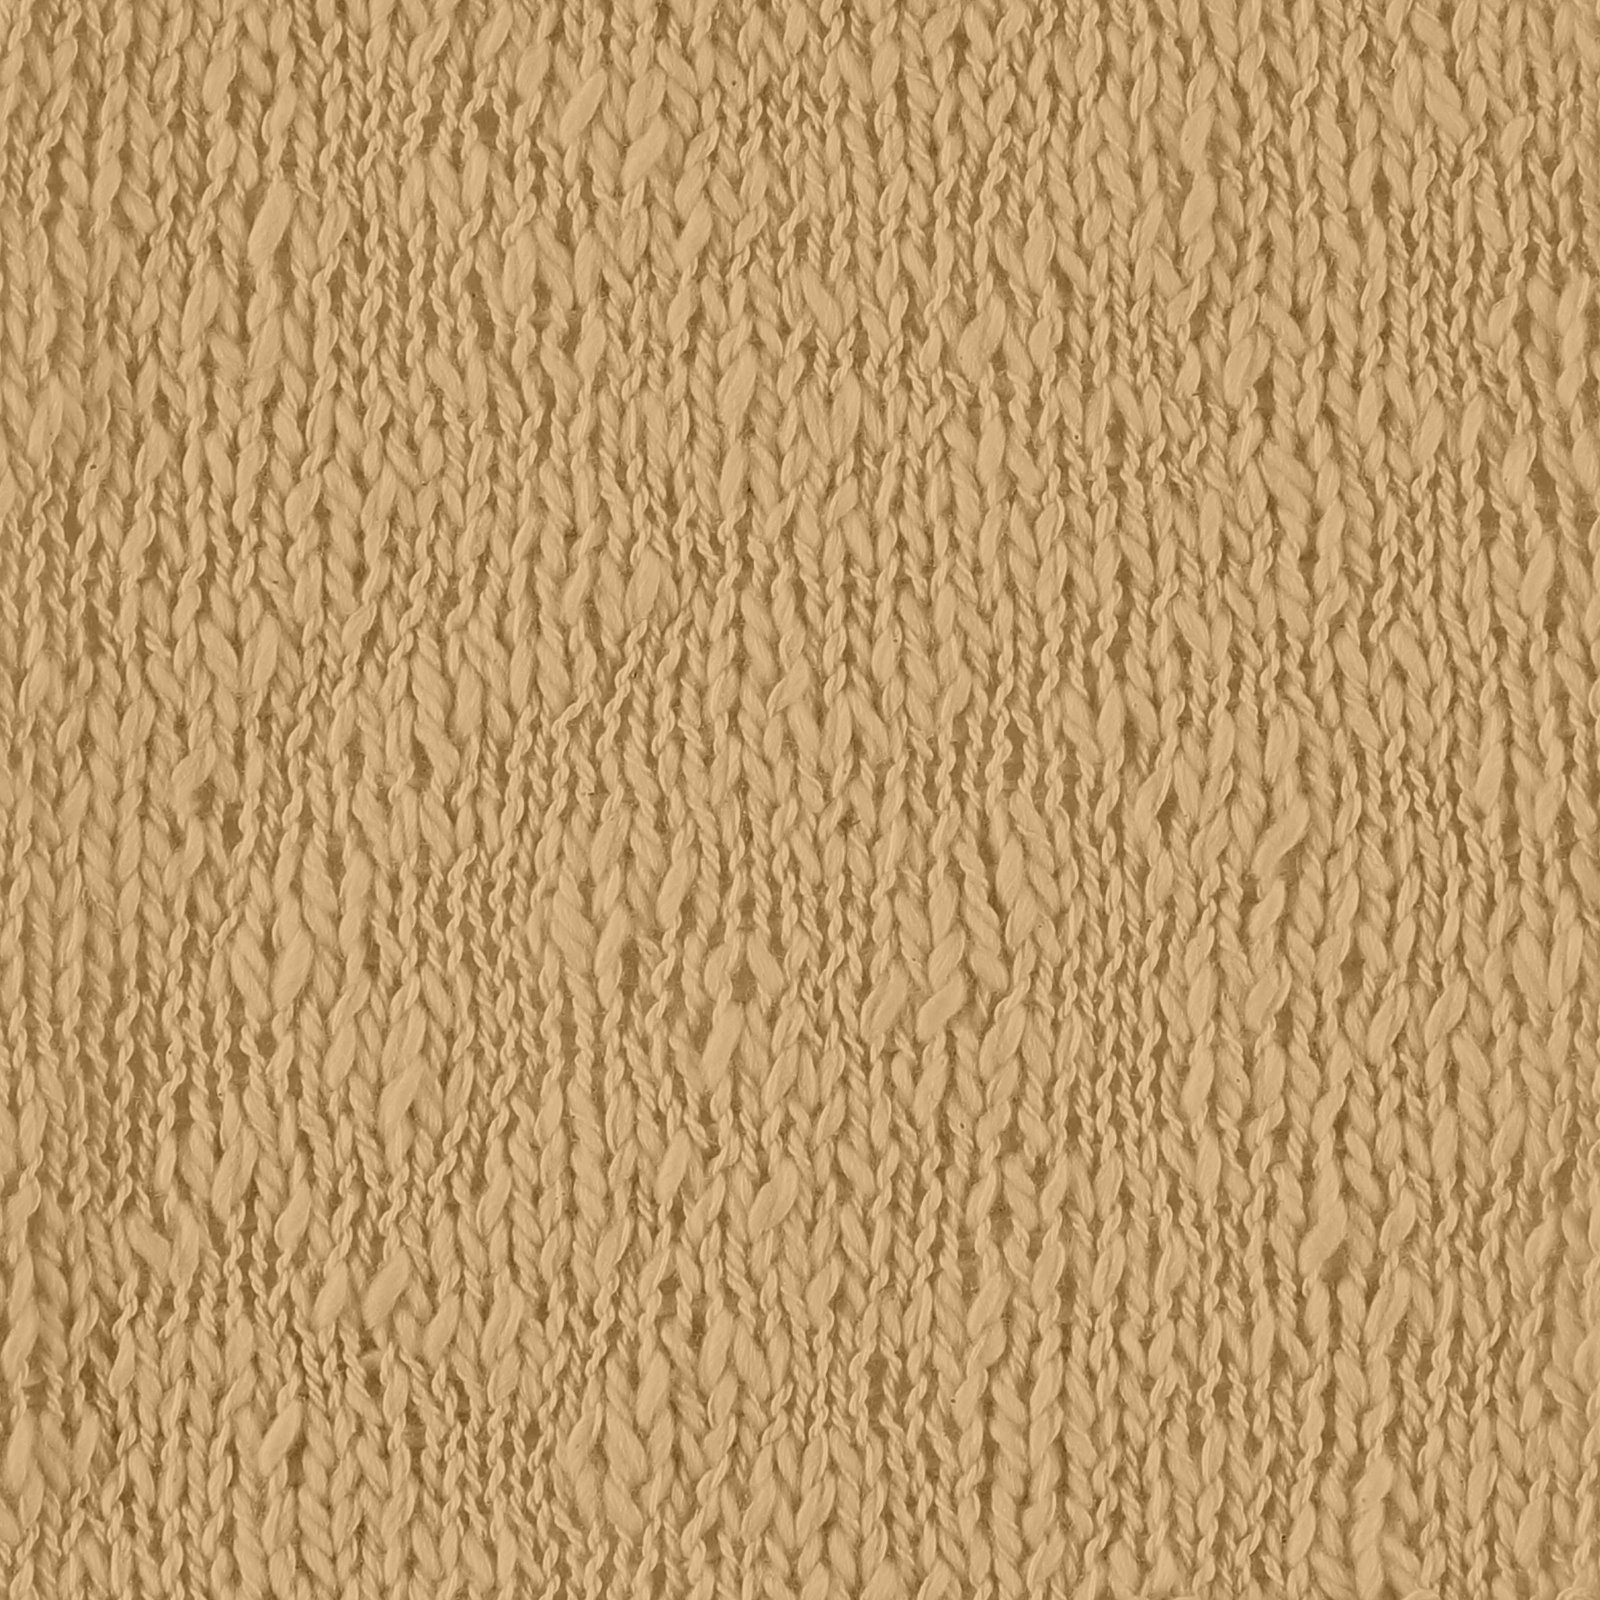 FRAYA, textured cotton yarn "Wavy", camel 90000198_sskit